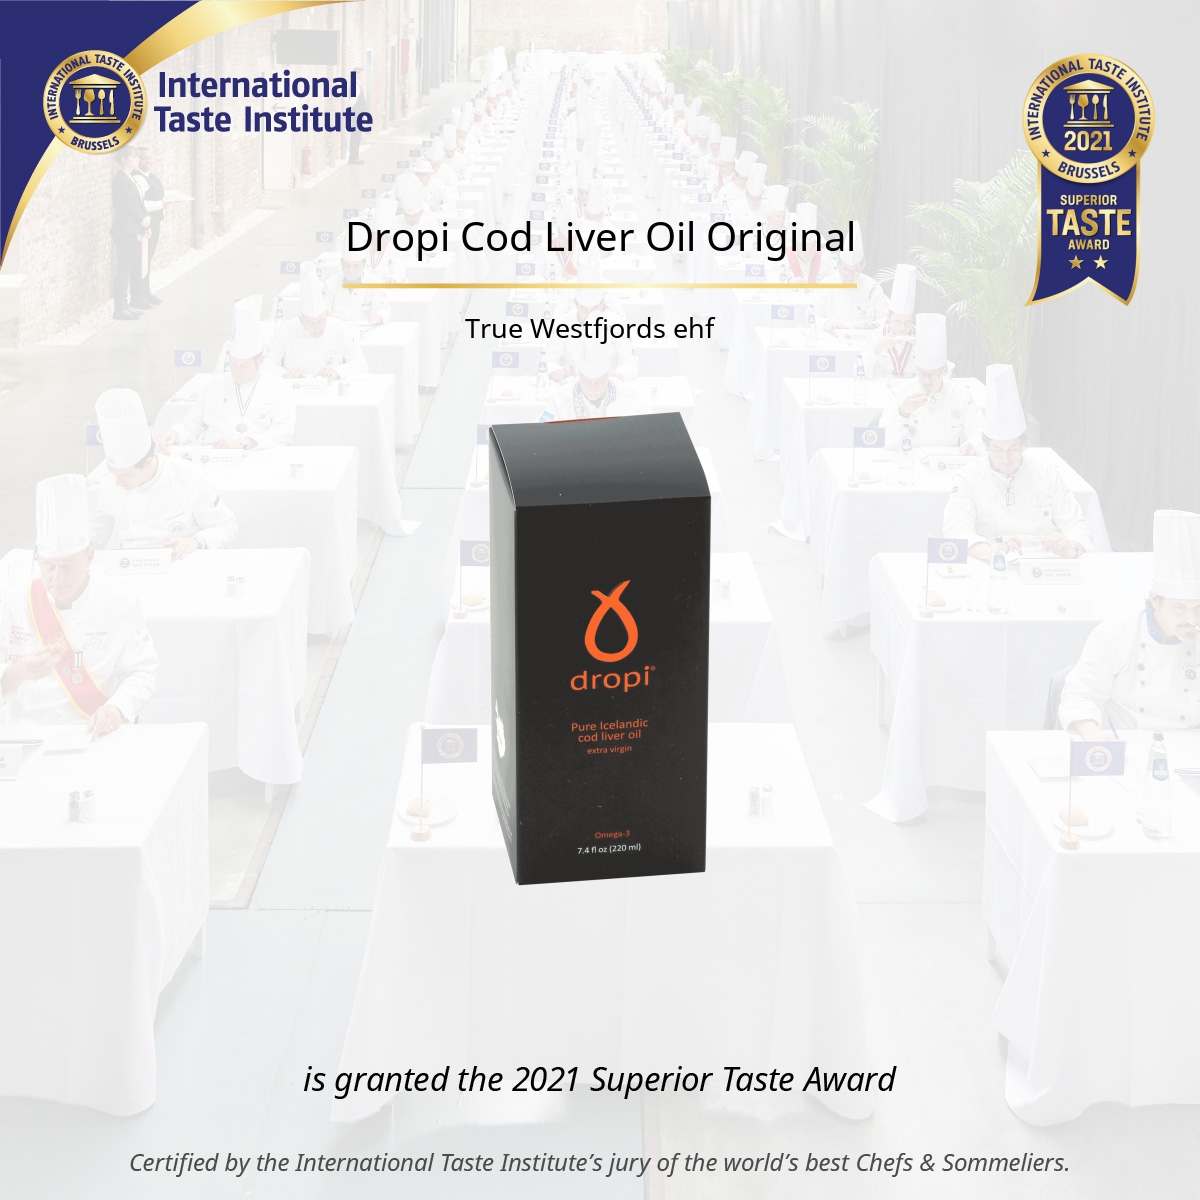 Square image of Dropi Cod Liver Oil Original